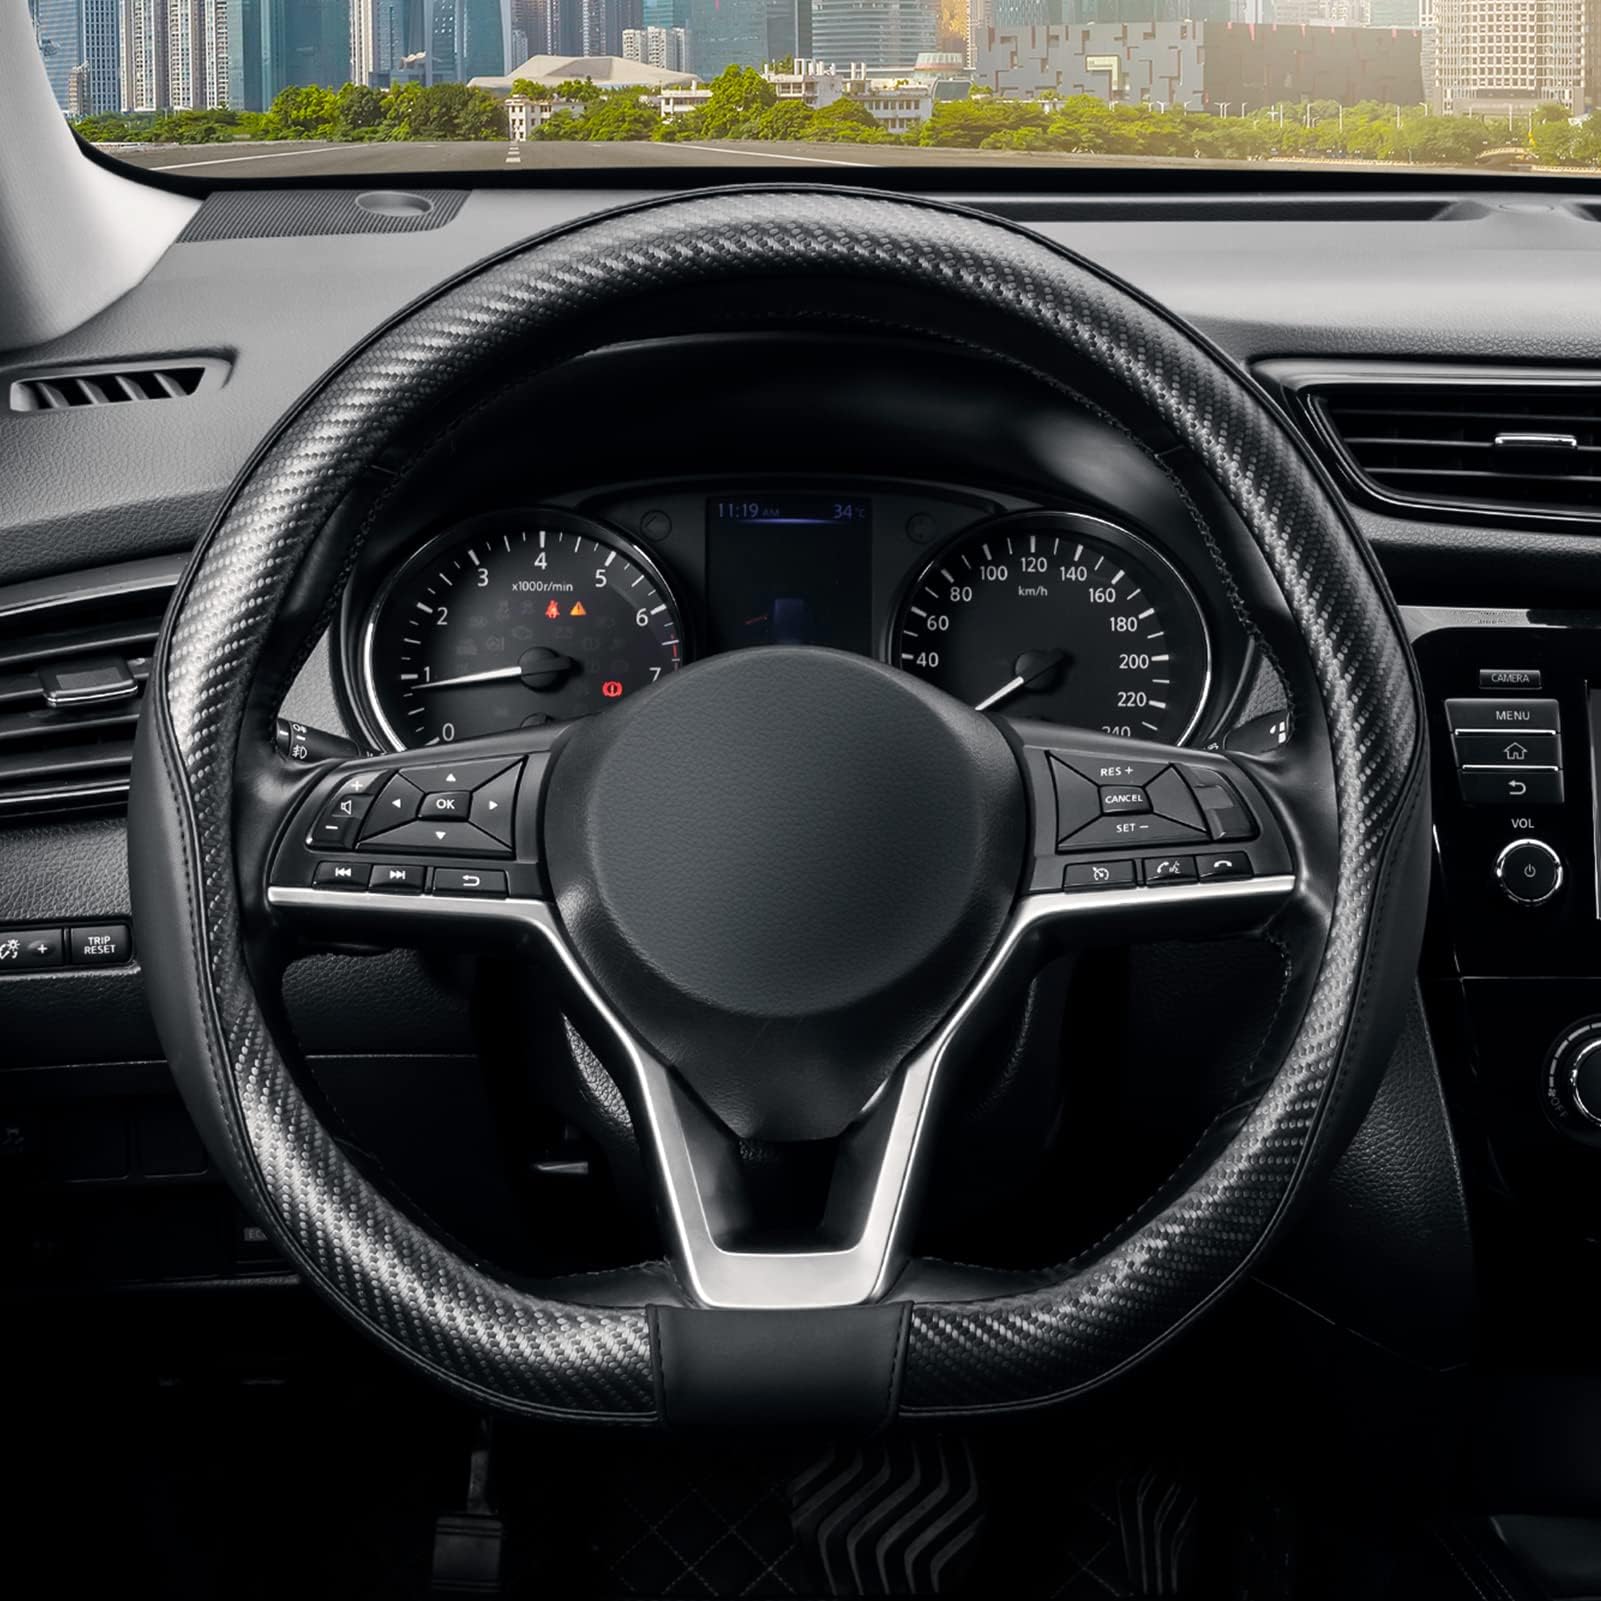 Lenkradabdeckung für Toyota GT86 I 2012-2019, Lenkradbezug Leder 37-38cm,Atmungsaktiv Auto Lenkrad Schutzhülle,Mode Anti-Rutsch-Leder Auto Innenraum,Black-D-type von aGGHJK